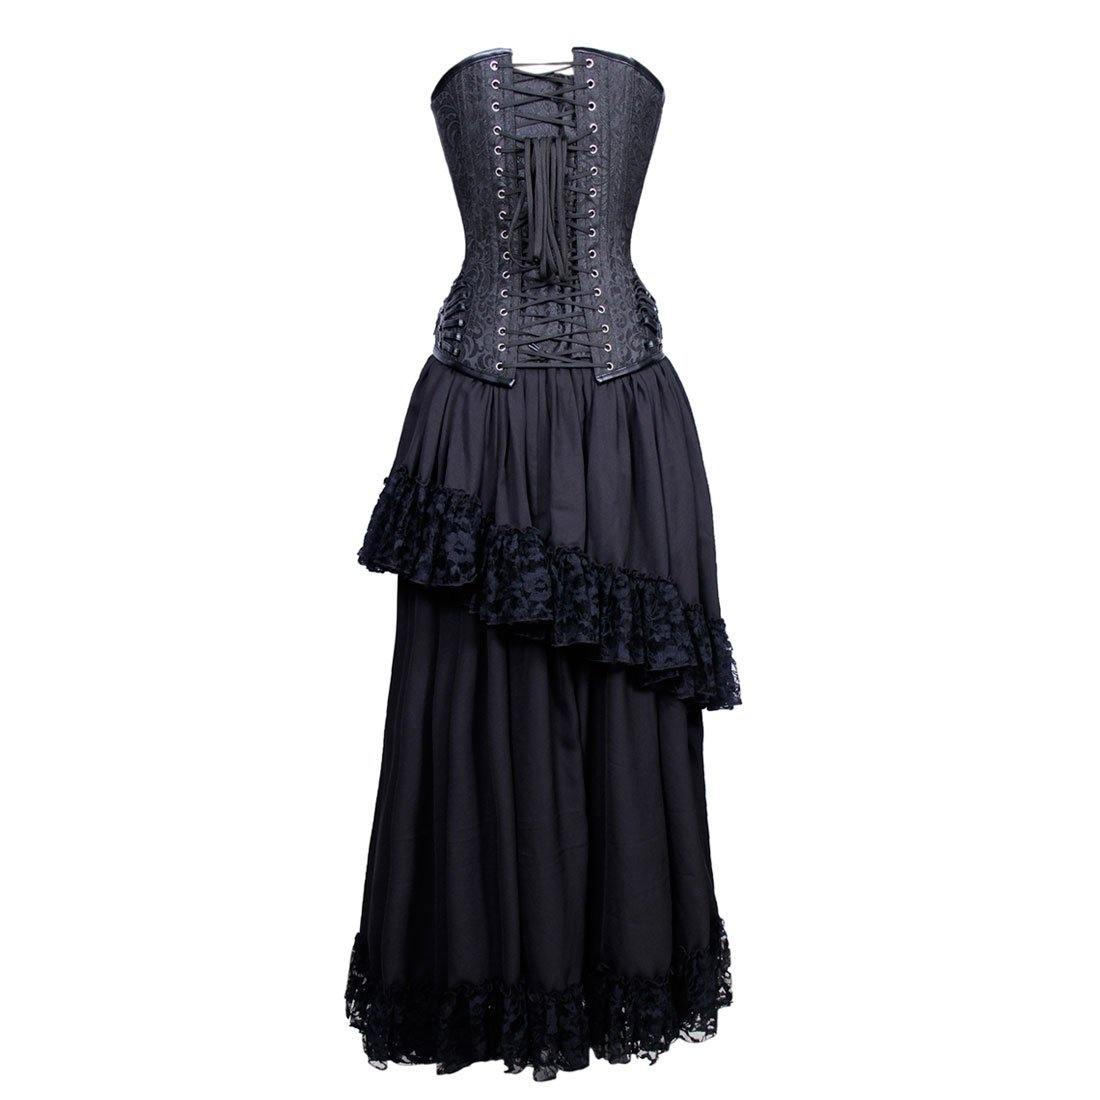 Jacobina Gothic Authentic Steel Boned Overbust Corset Dress - Corset Revolution